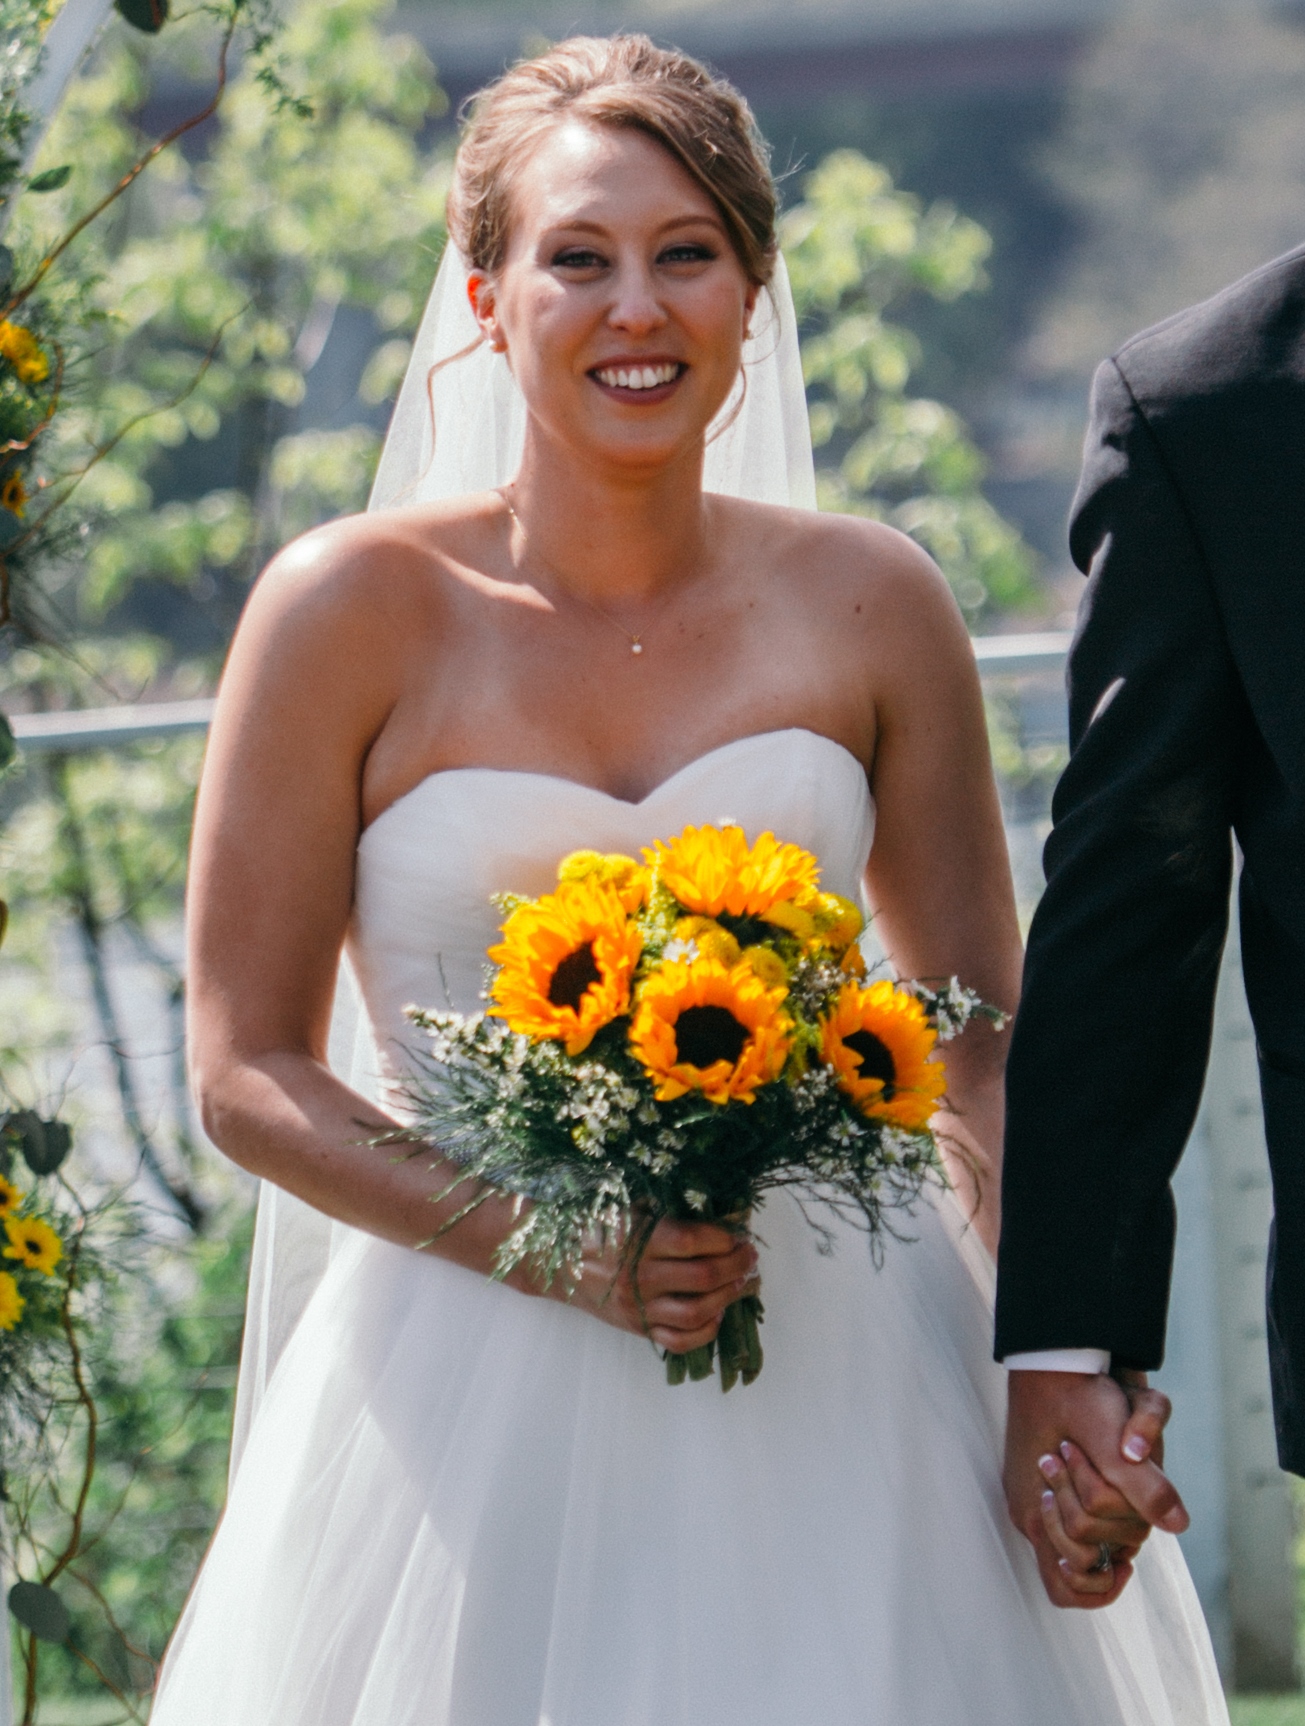 Bride with Sunflower Bouquet